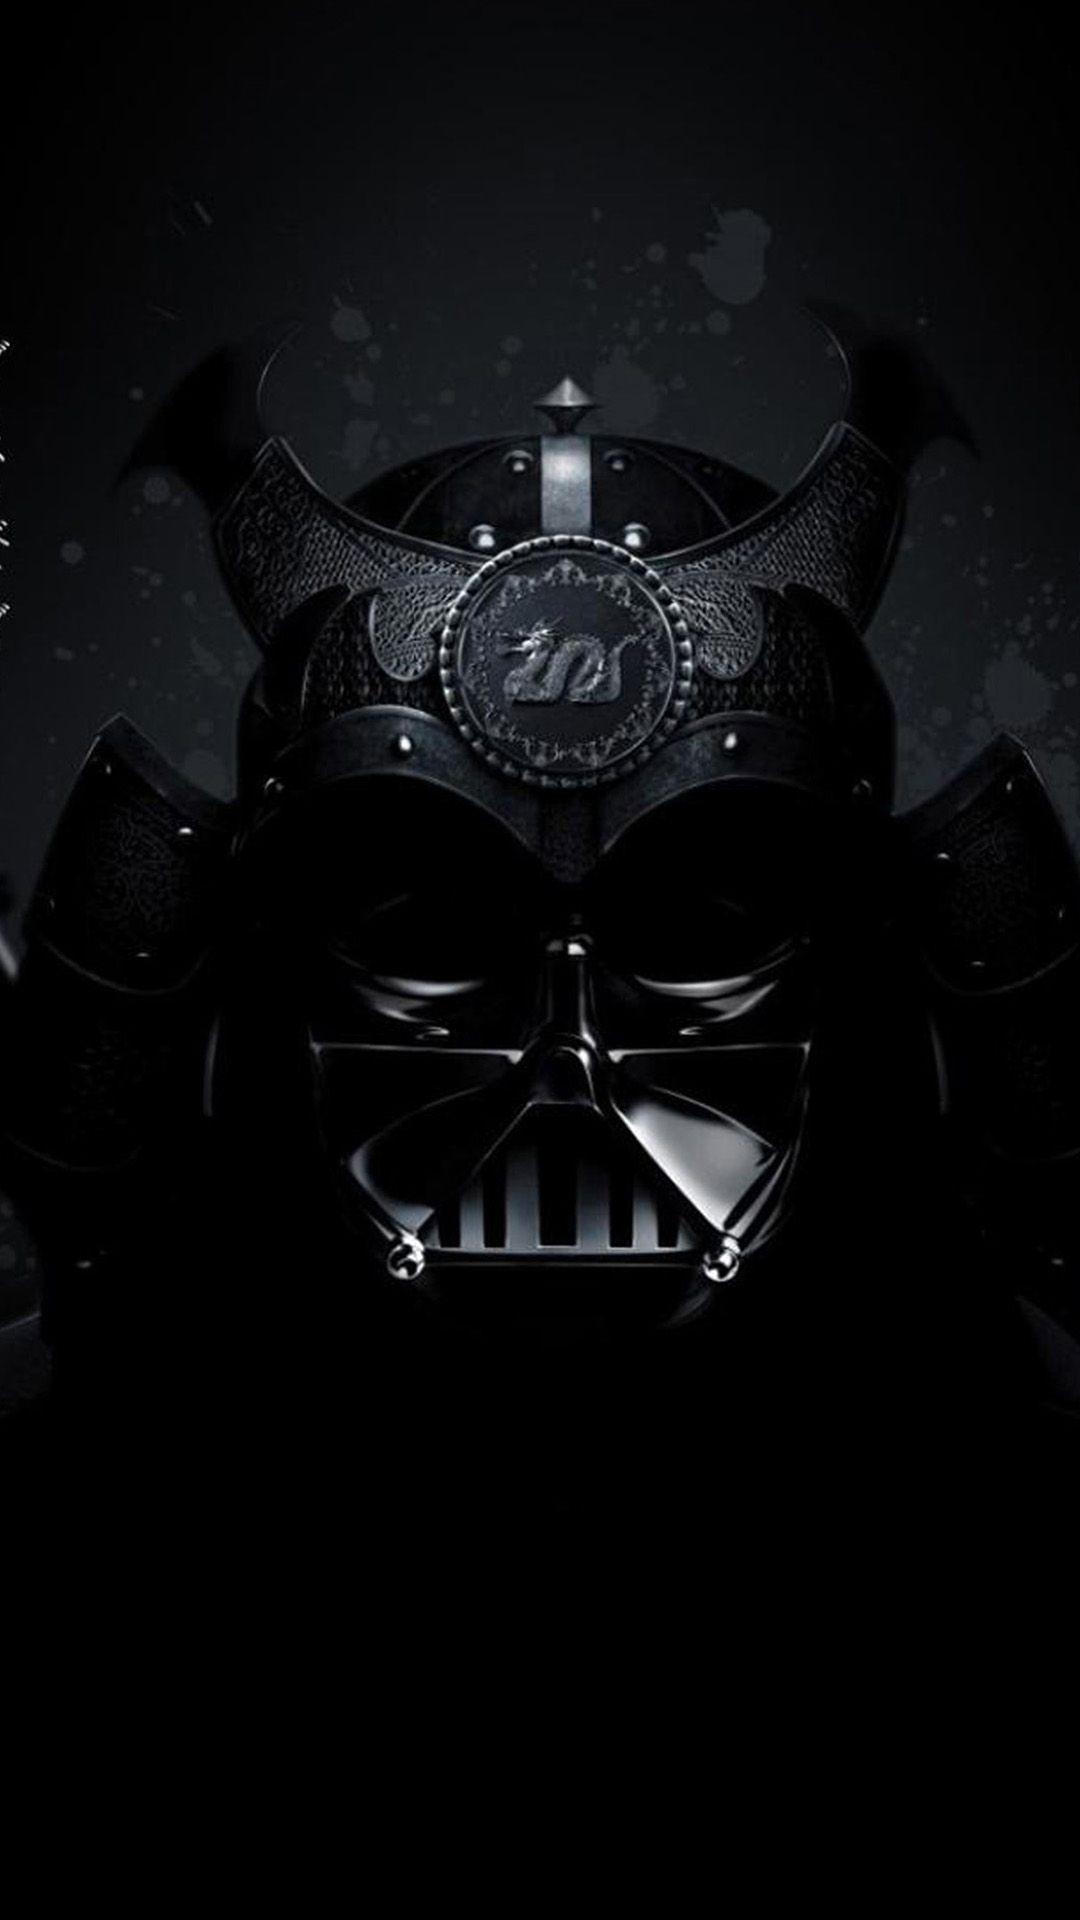 Darth Vader Ninja Samsung Wallpaper, Samsung Galaxy S Galaxy S4